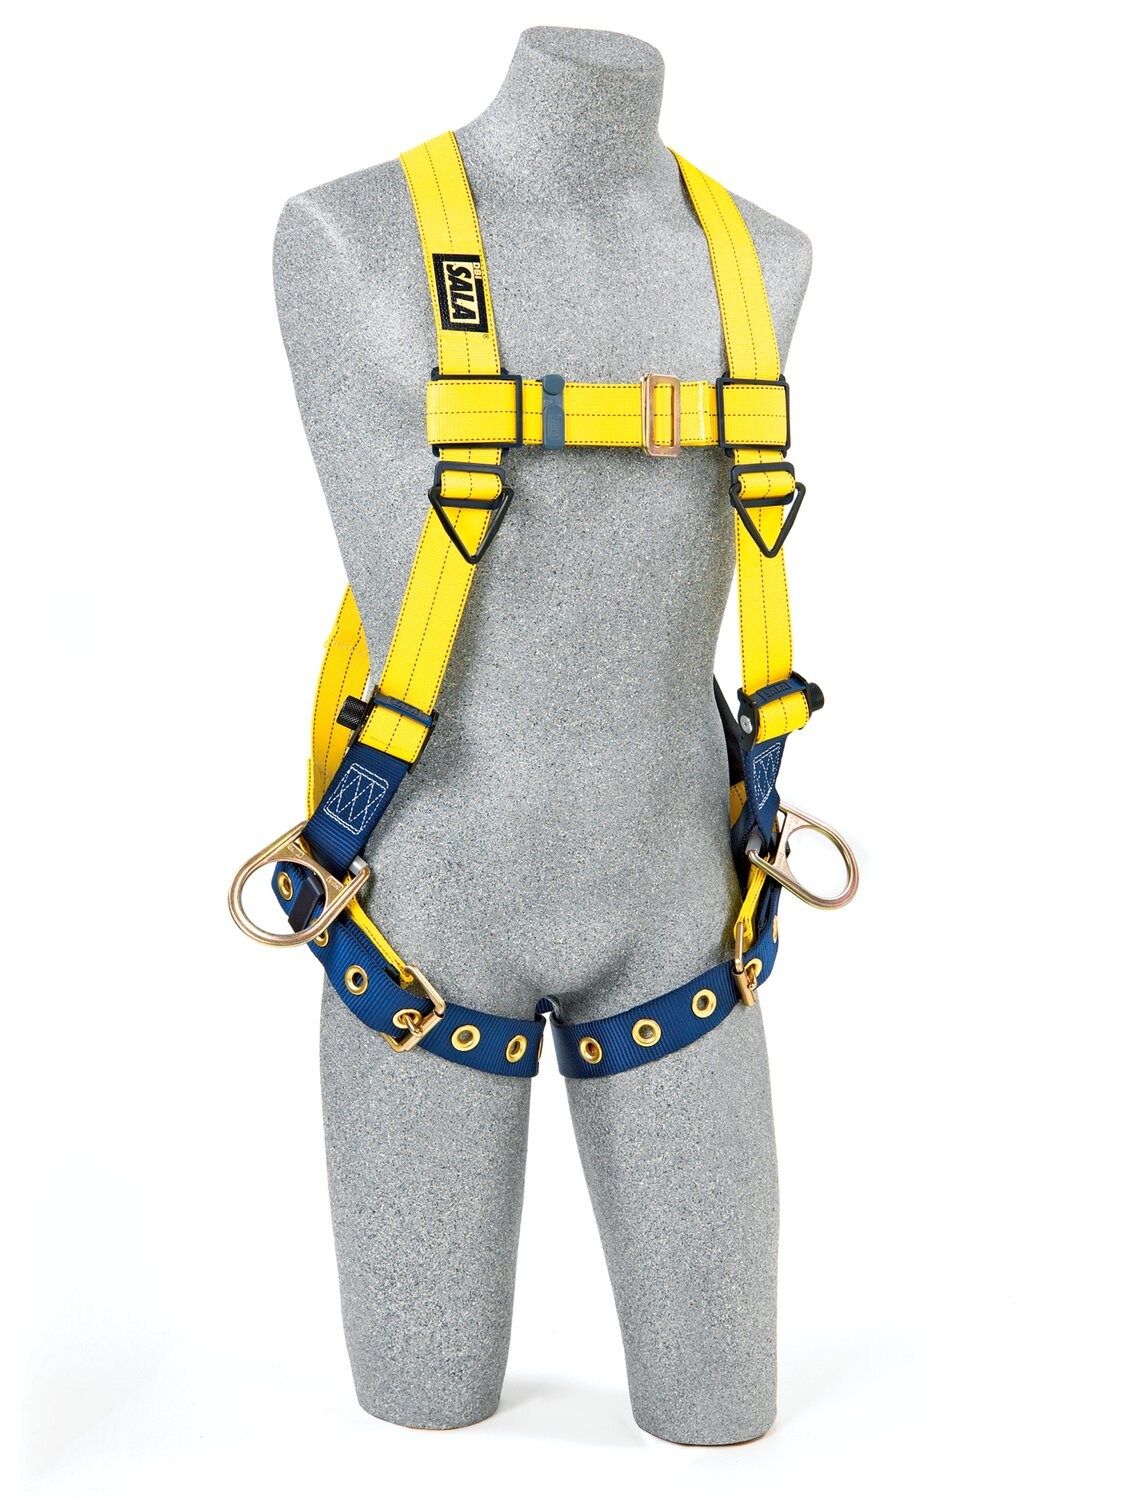 7012815496 - 3M DBI-SALA Delta Vest Positioning Safety Harness 1104876, 2X